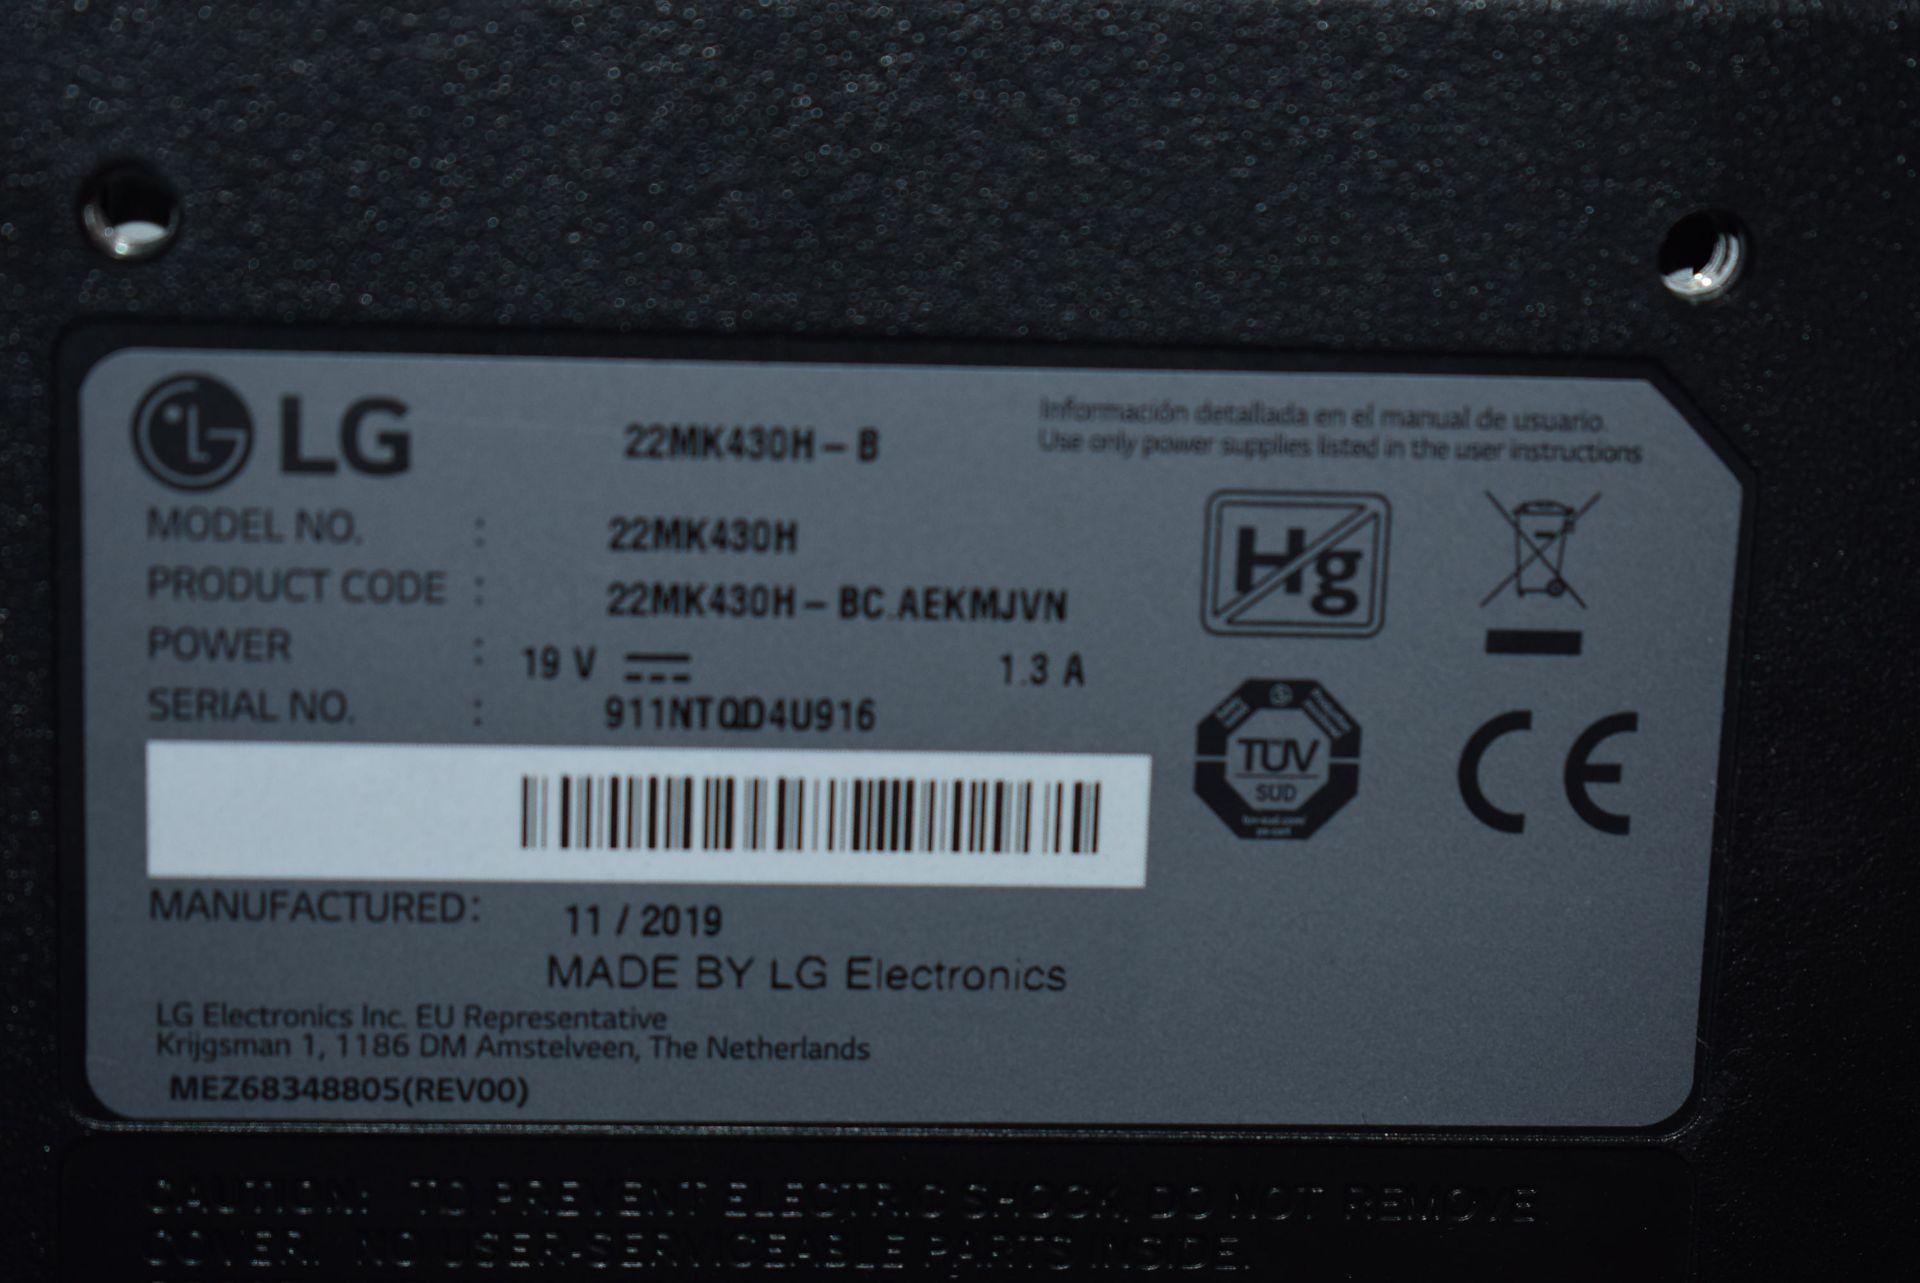 *Three LG Monitors 22MK430H - Image 2 of 2